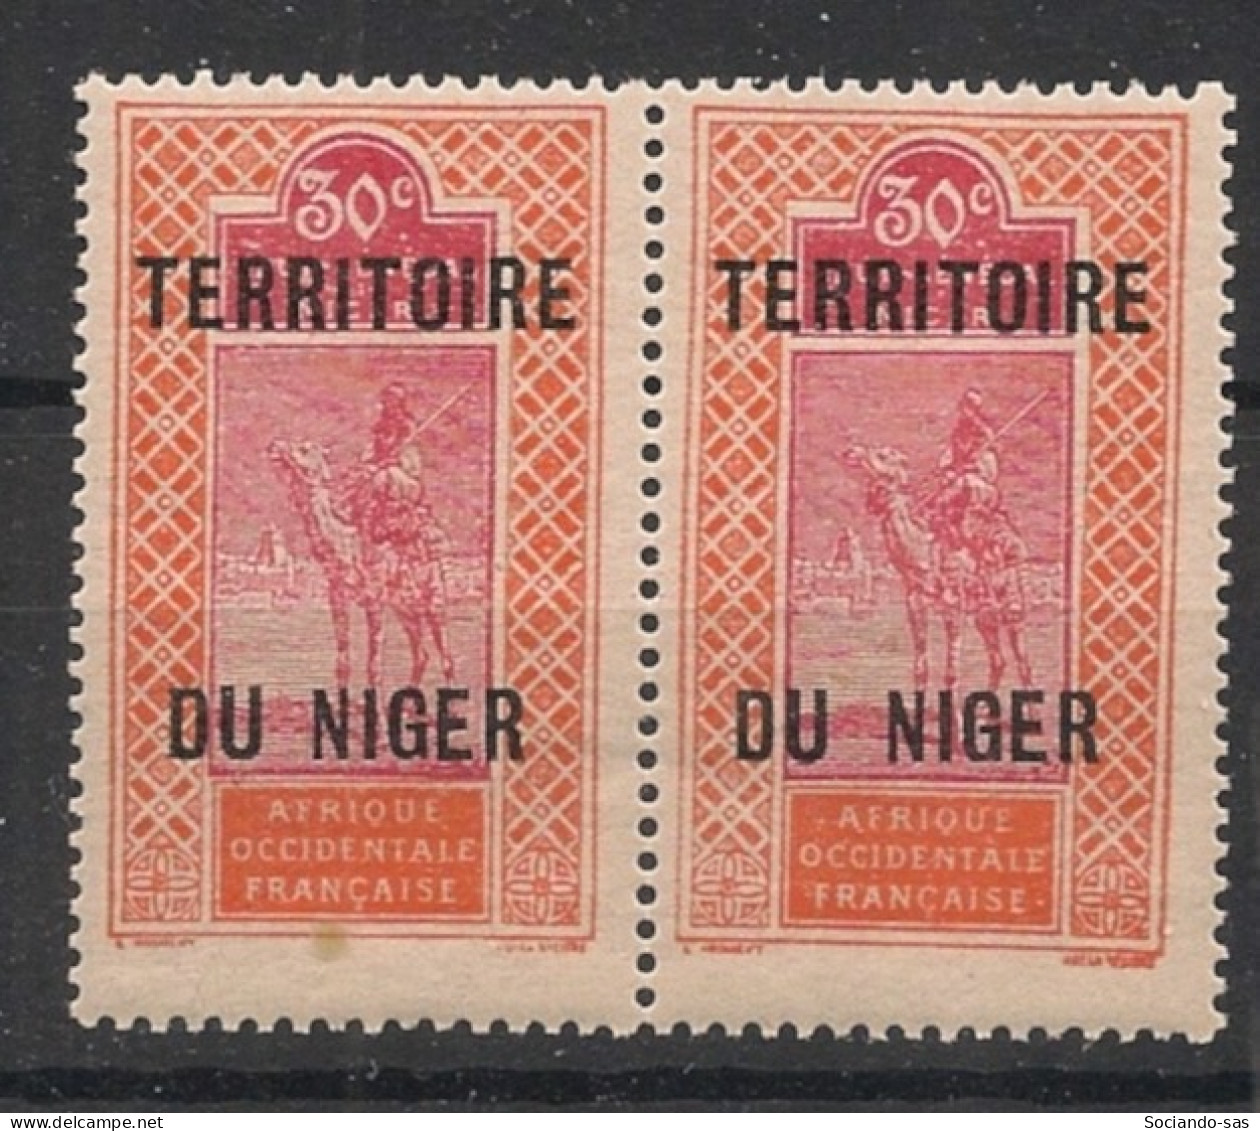 NIGER - 1921-22 - N°YT 9Aa - Targui 30c Rouge - VARIETE DU Et NIGER Espacés T.a.n. - Neuf Luxe ** / MNH / Postfrisch - Ungebraucht